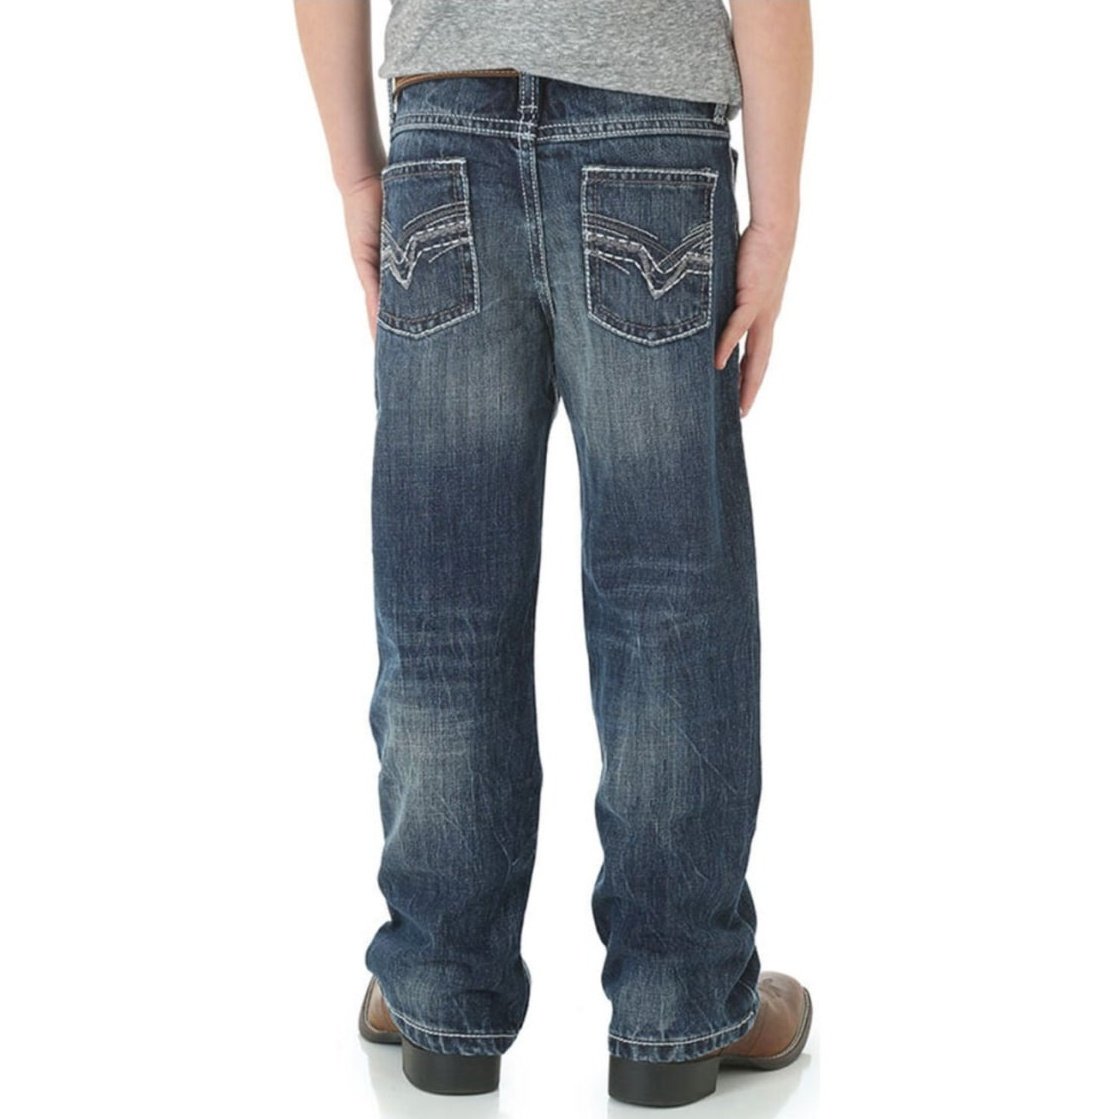 Wrangler Boy’s Jeans 20X Vintage Boot 104BWXCL Sizes 8-16 - Wrangler